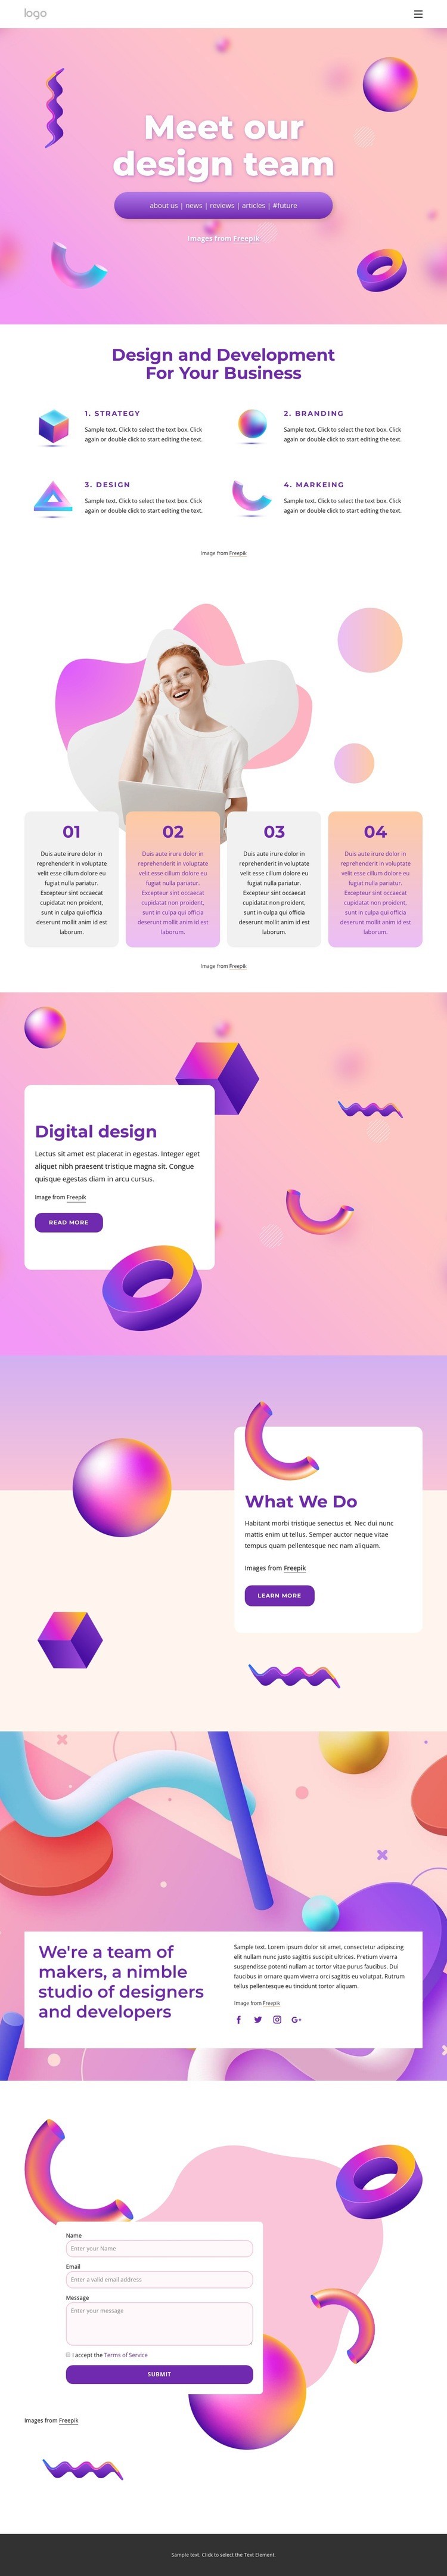 Web design and development company Homepage Design